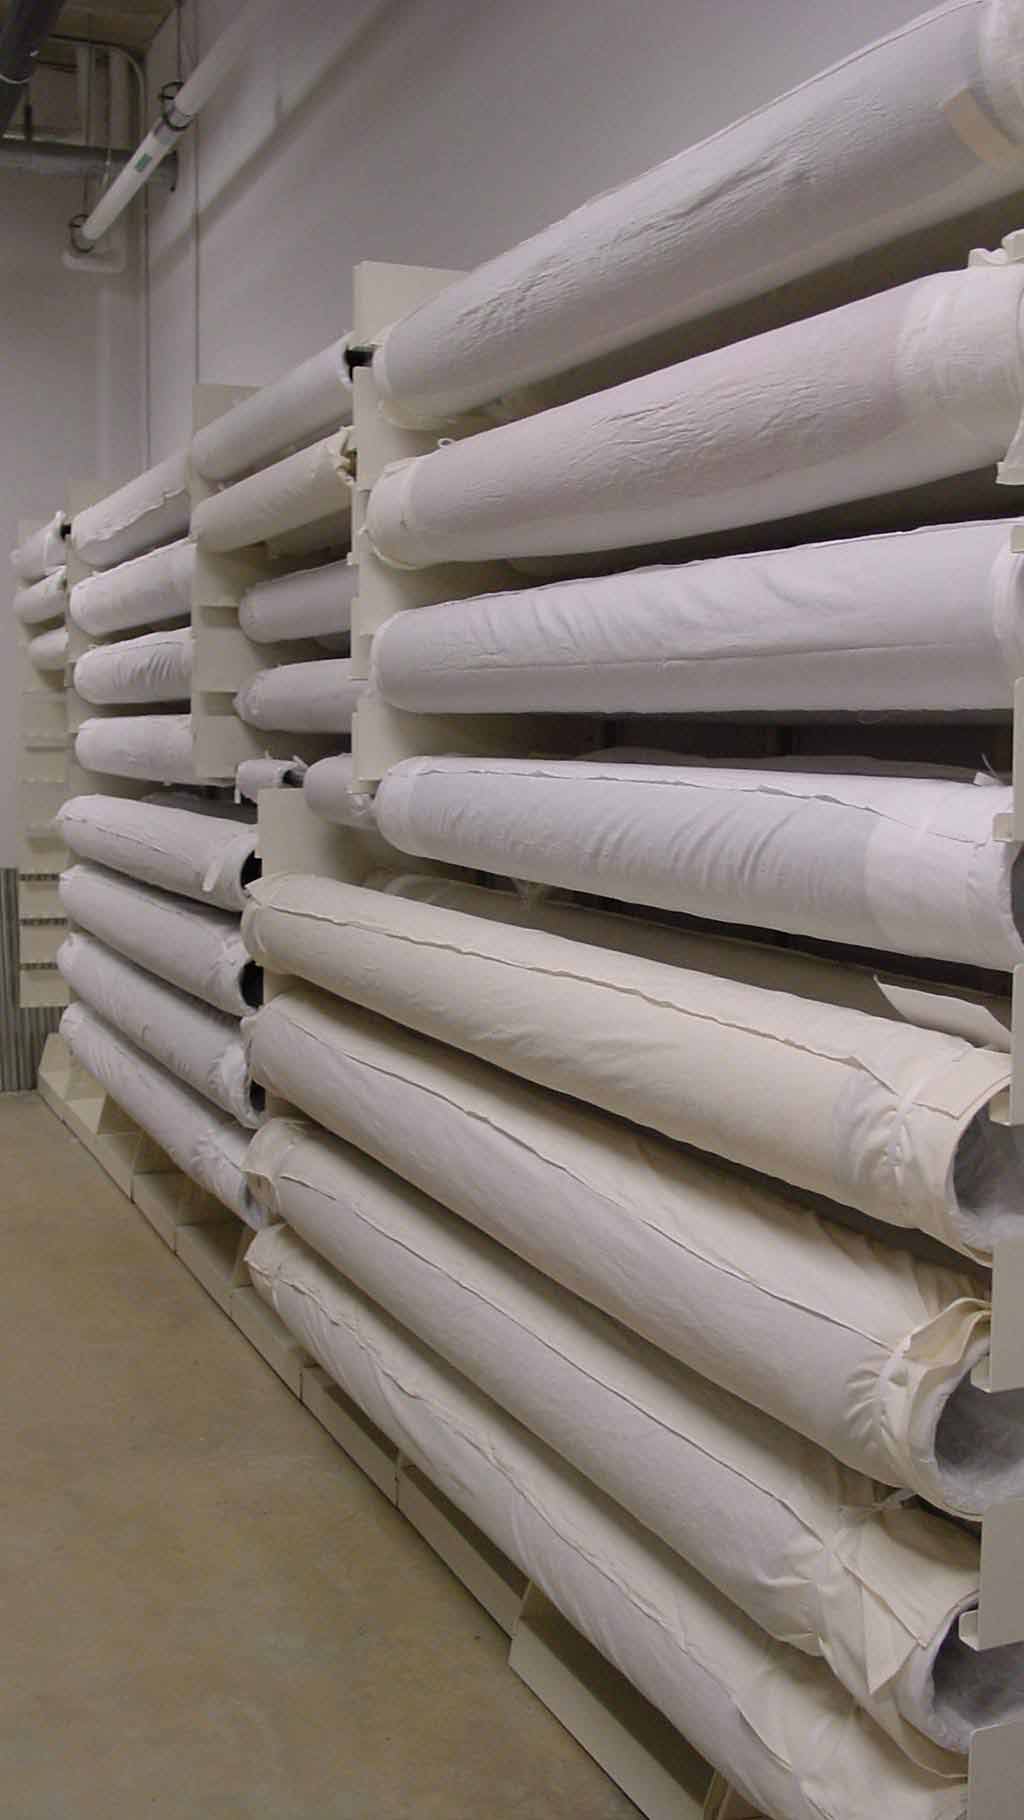 rolls of textiles on racks